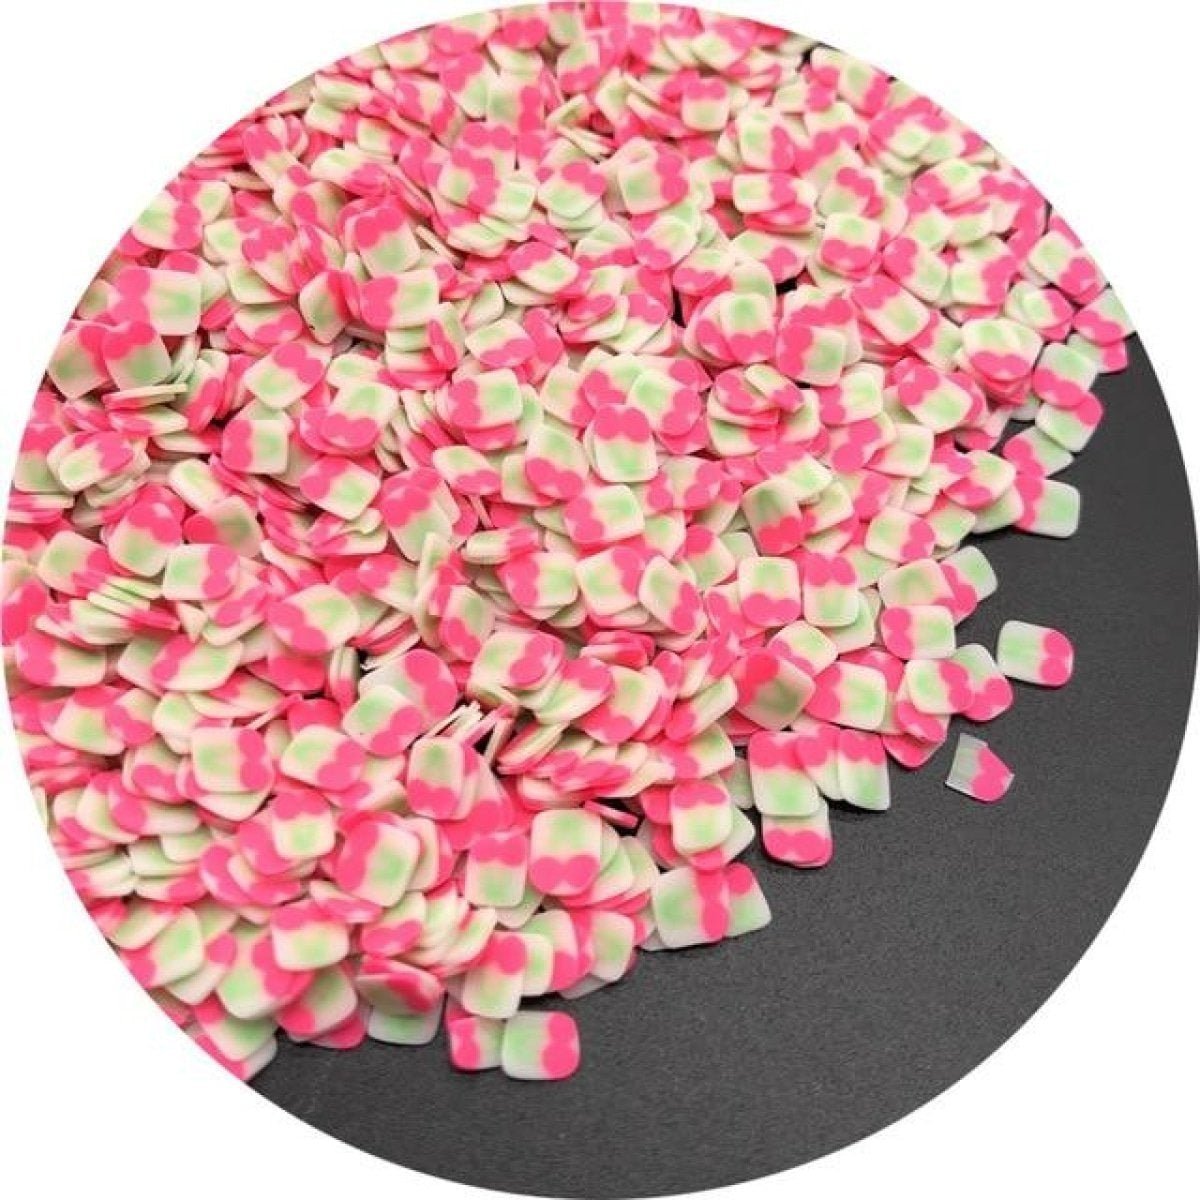 1000pcs 3-6mm Mixed Fruit Animal Clay Beads Decoration Crafts Scrapbook Nail Art - Butterflies - - Asia Sell